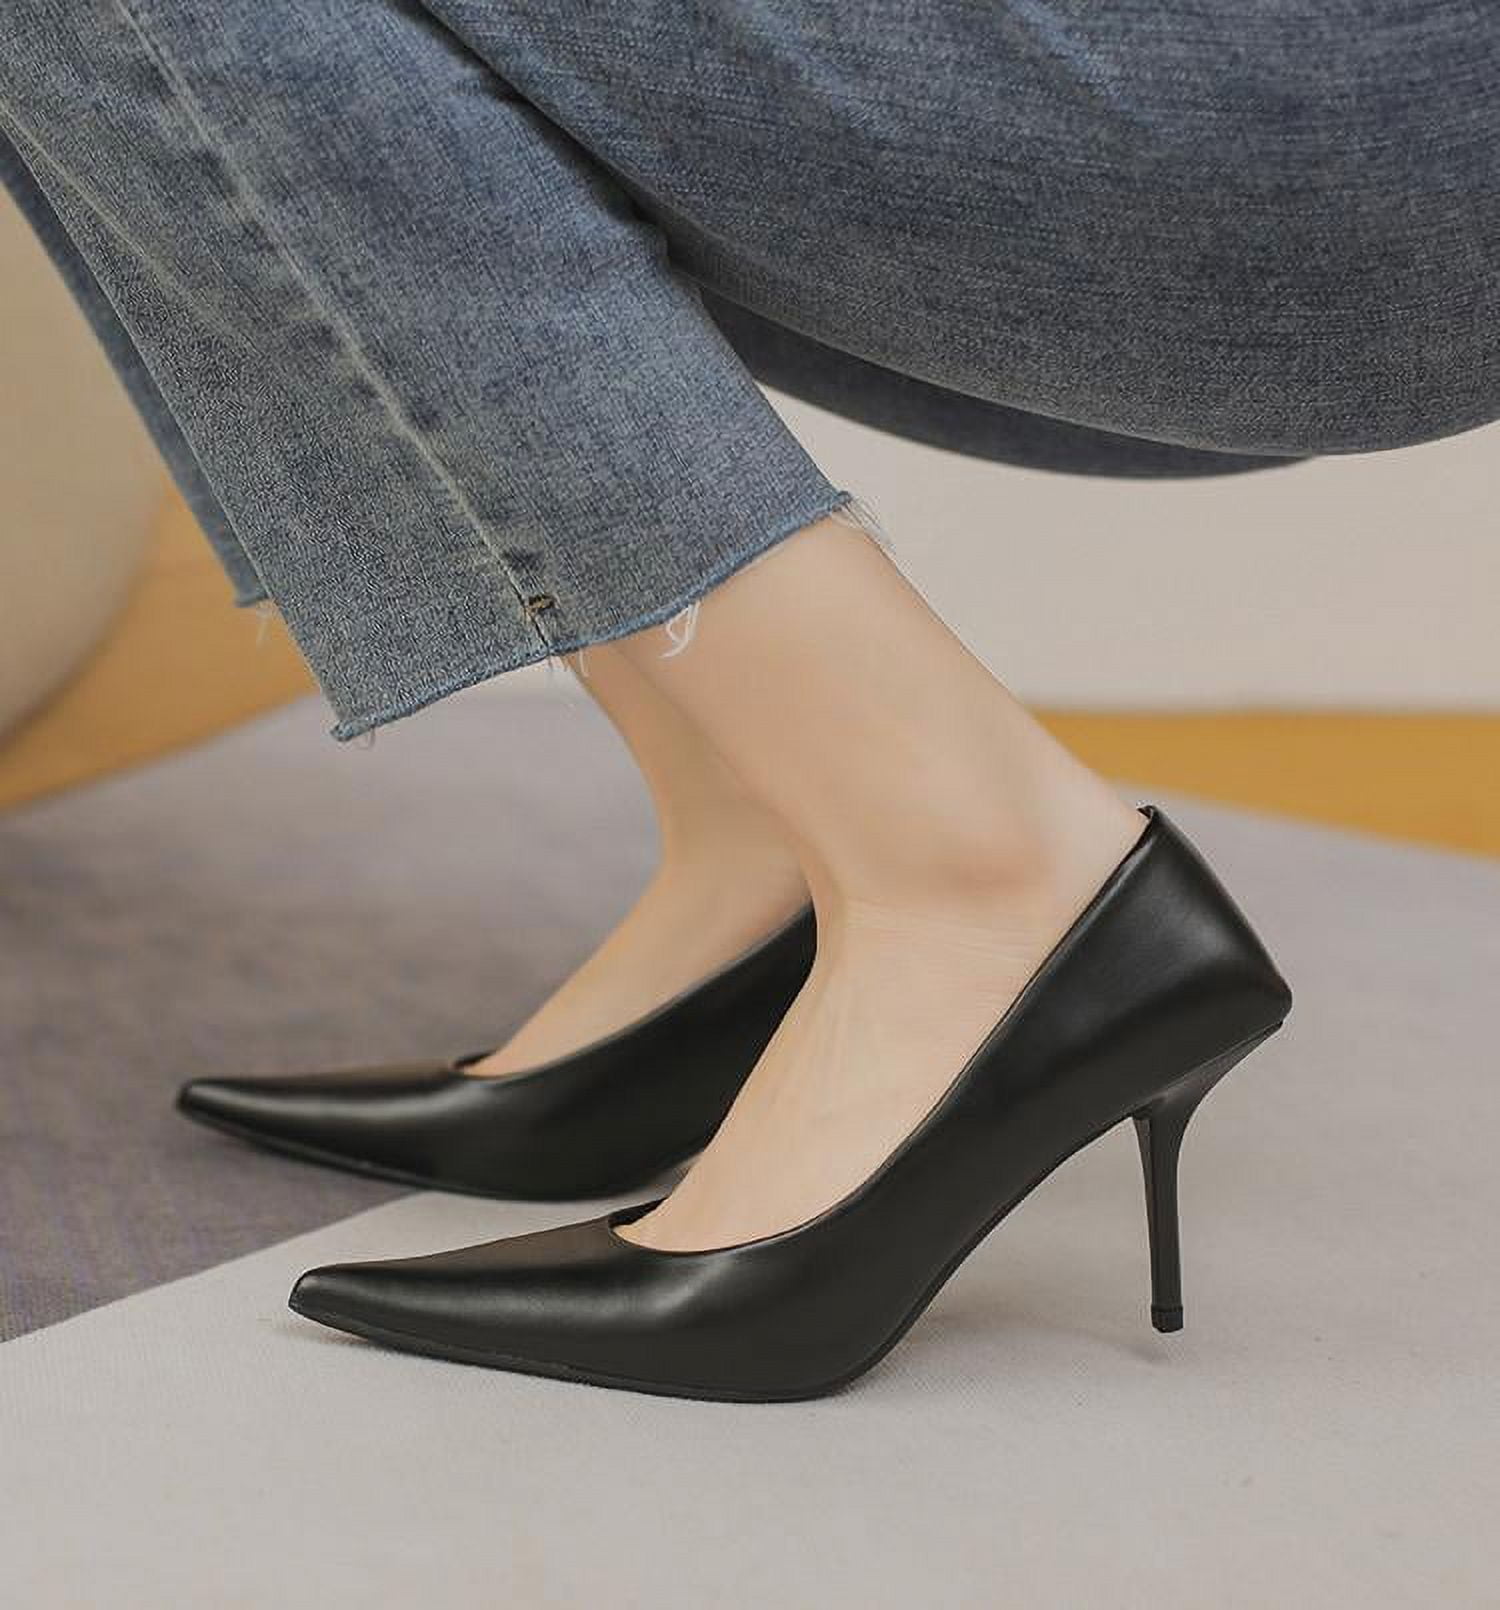 The Most Comfortable Work Heels | POPSUGAR Fashion